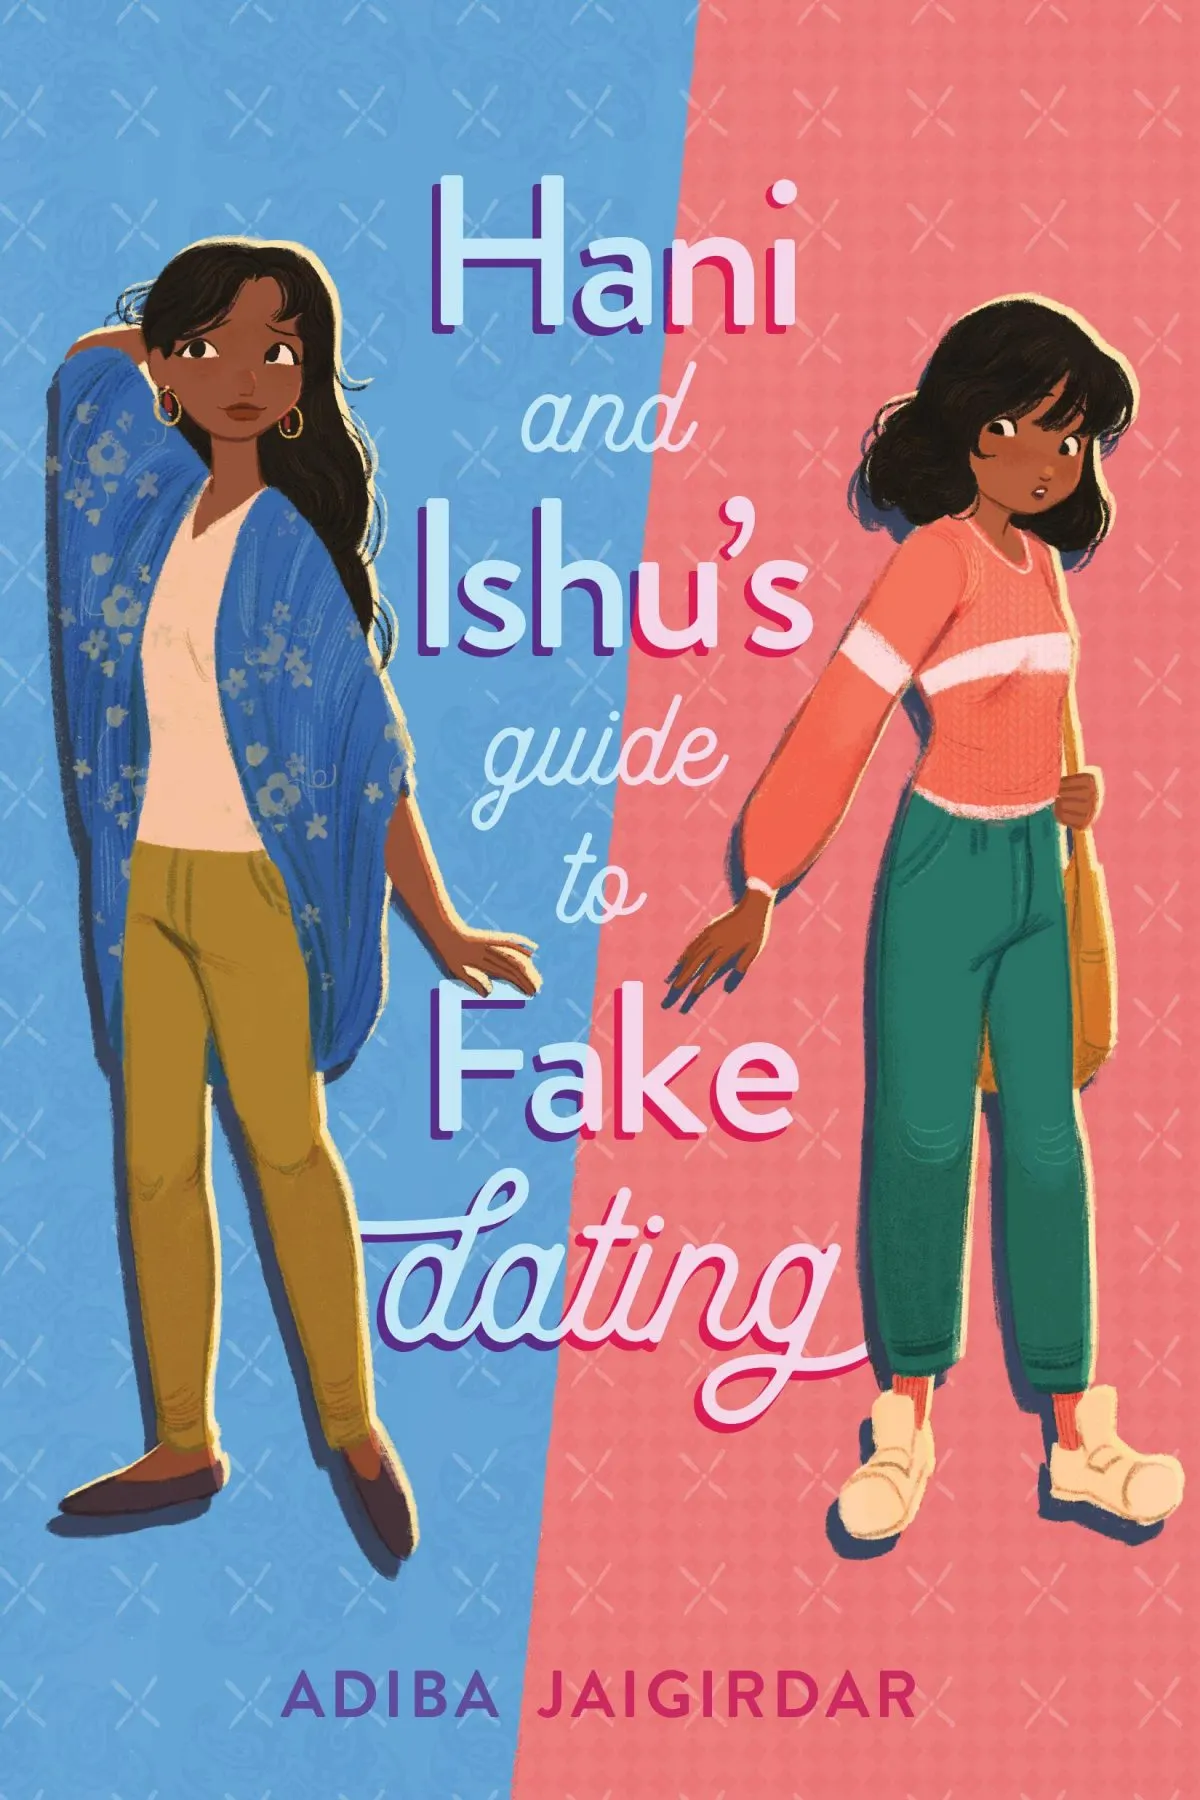 Hani and Ishu’s Guide to Fake Dating by Adiba Jaigirdar